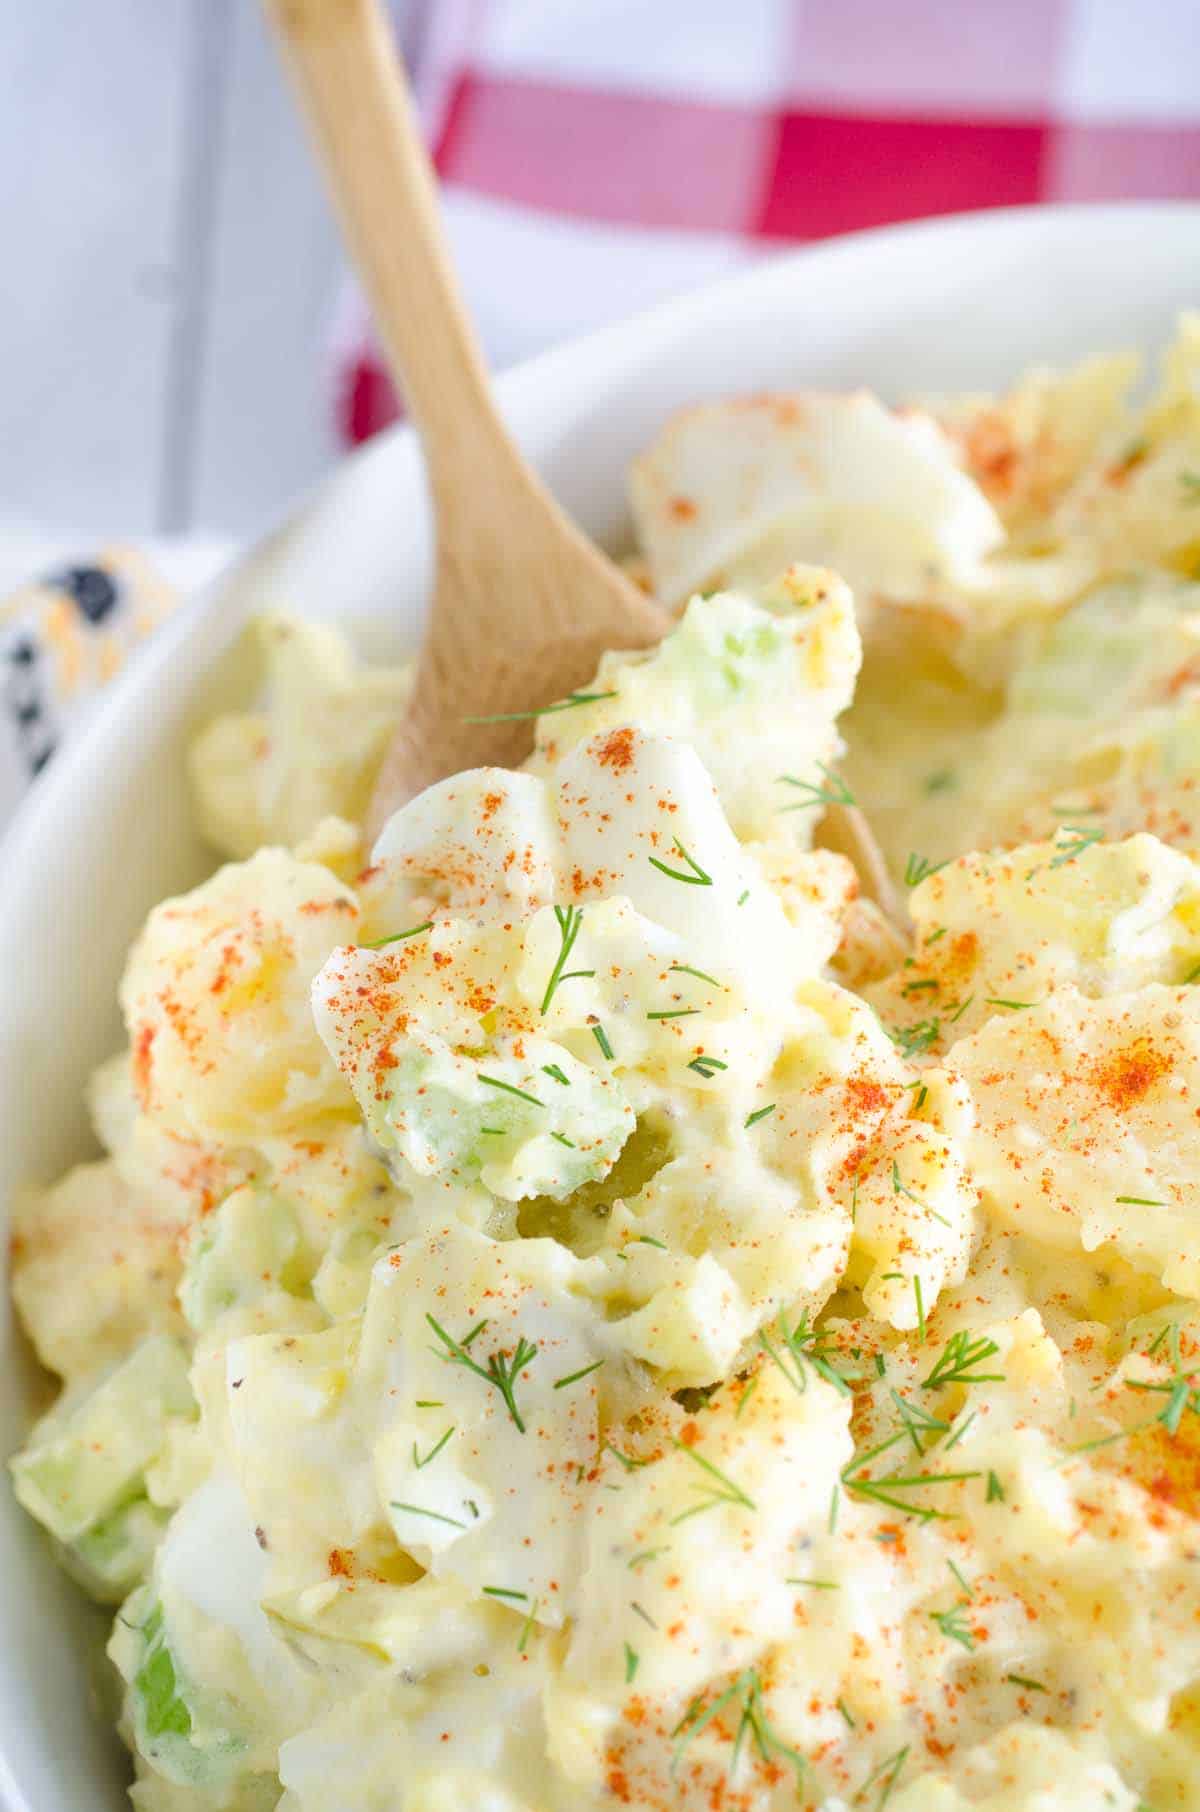 scoop of potato salad